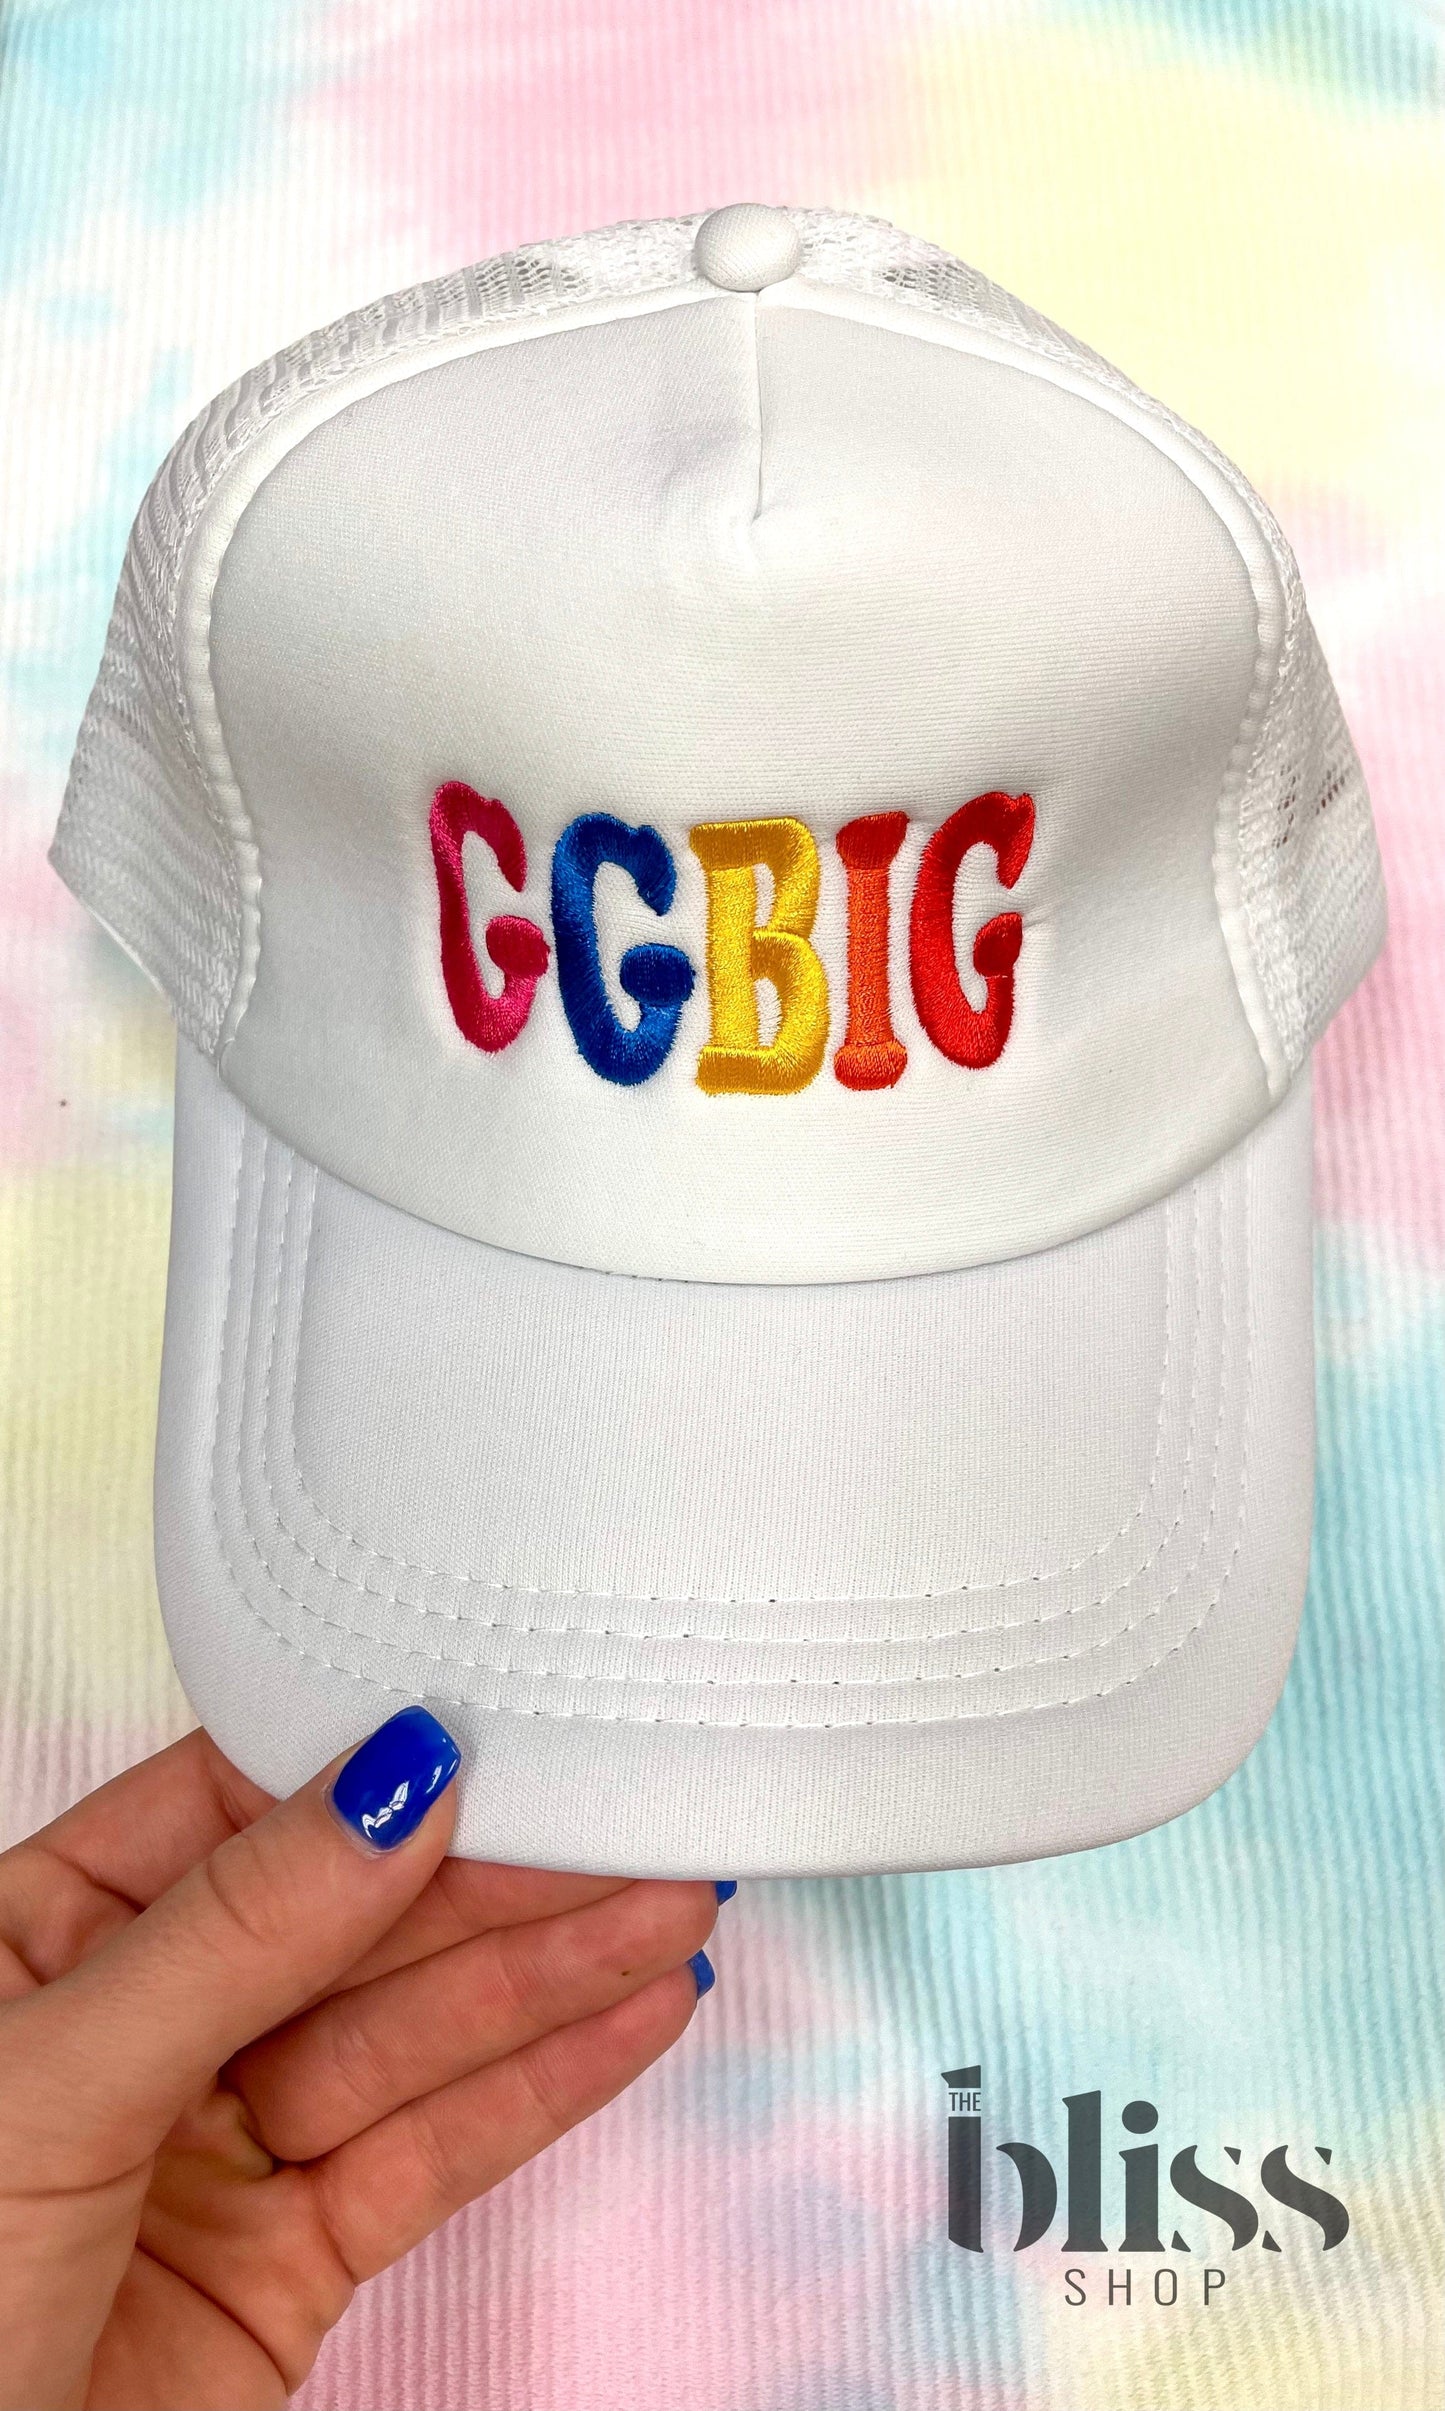 GGBIG Sorority Girl Trucker Hat